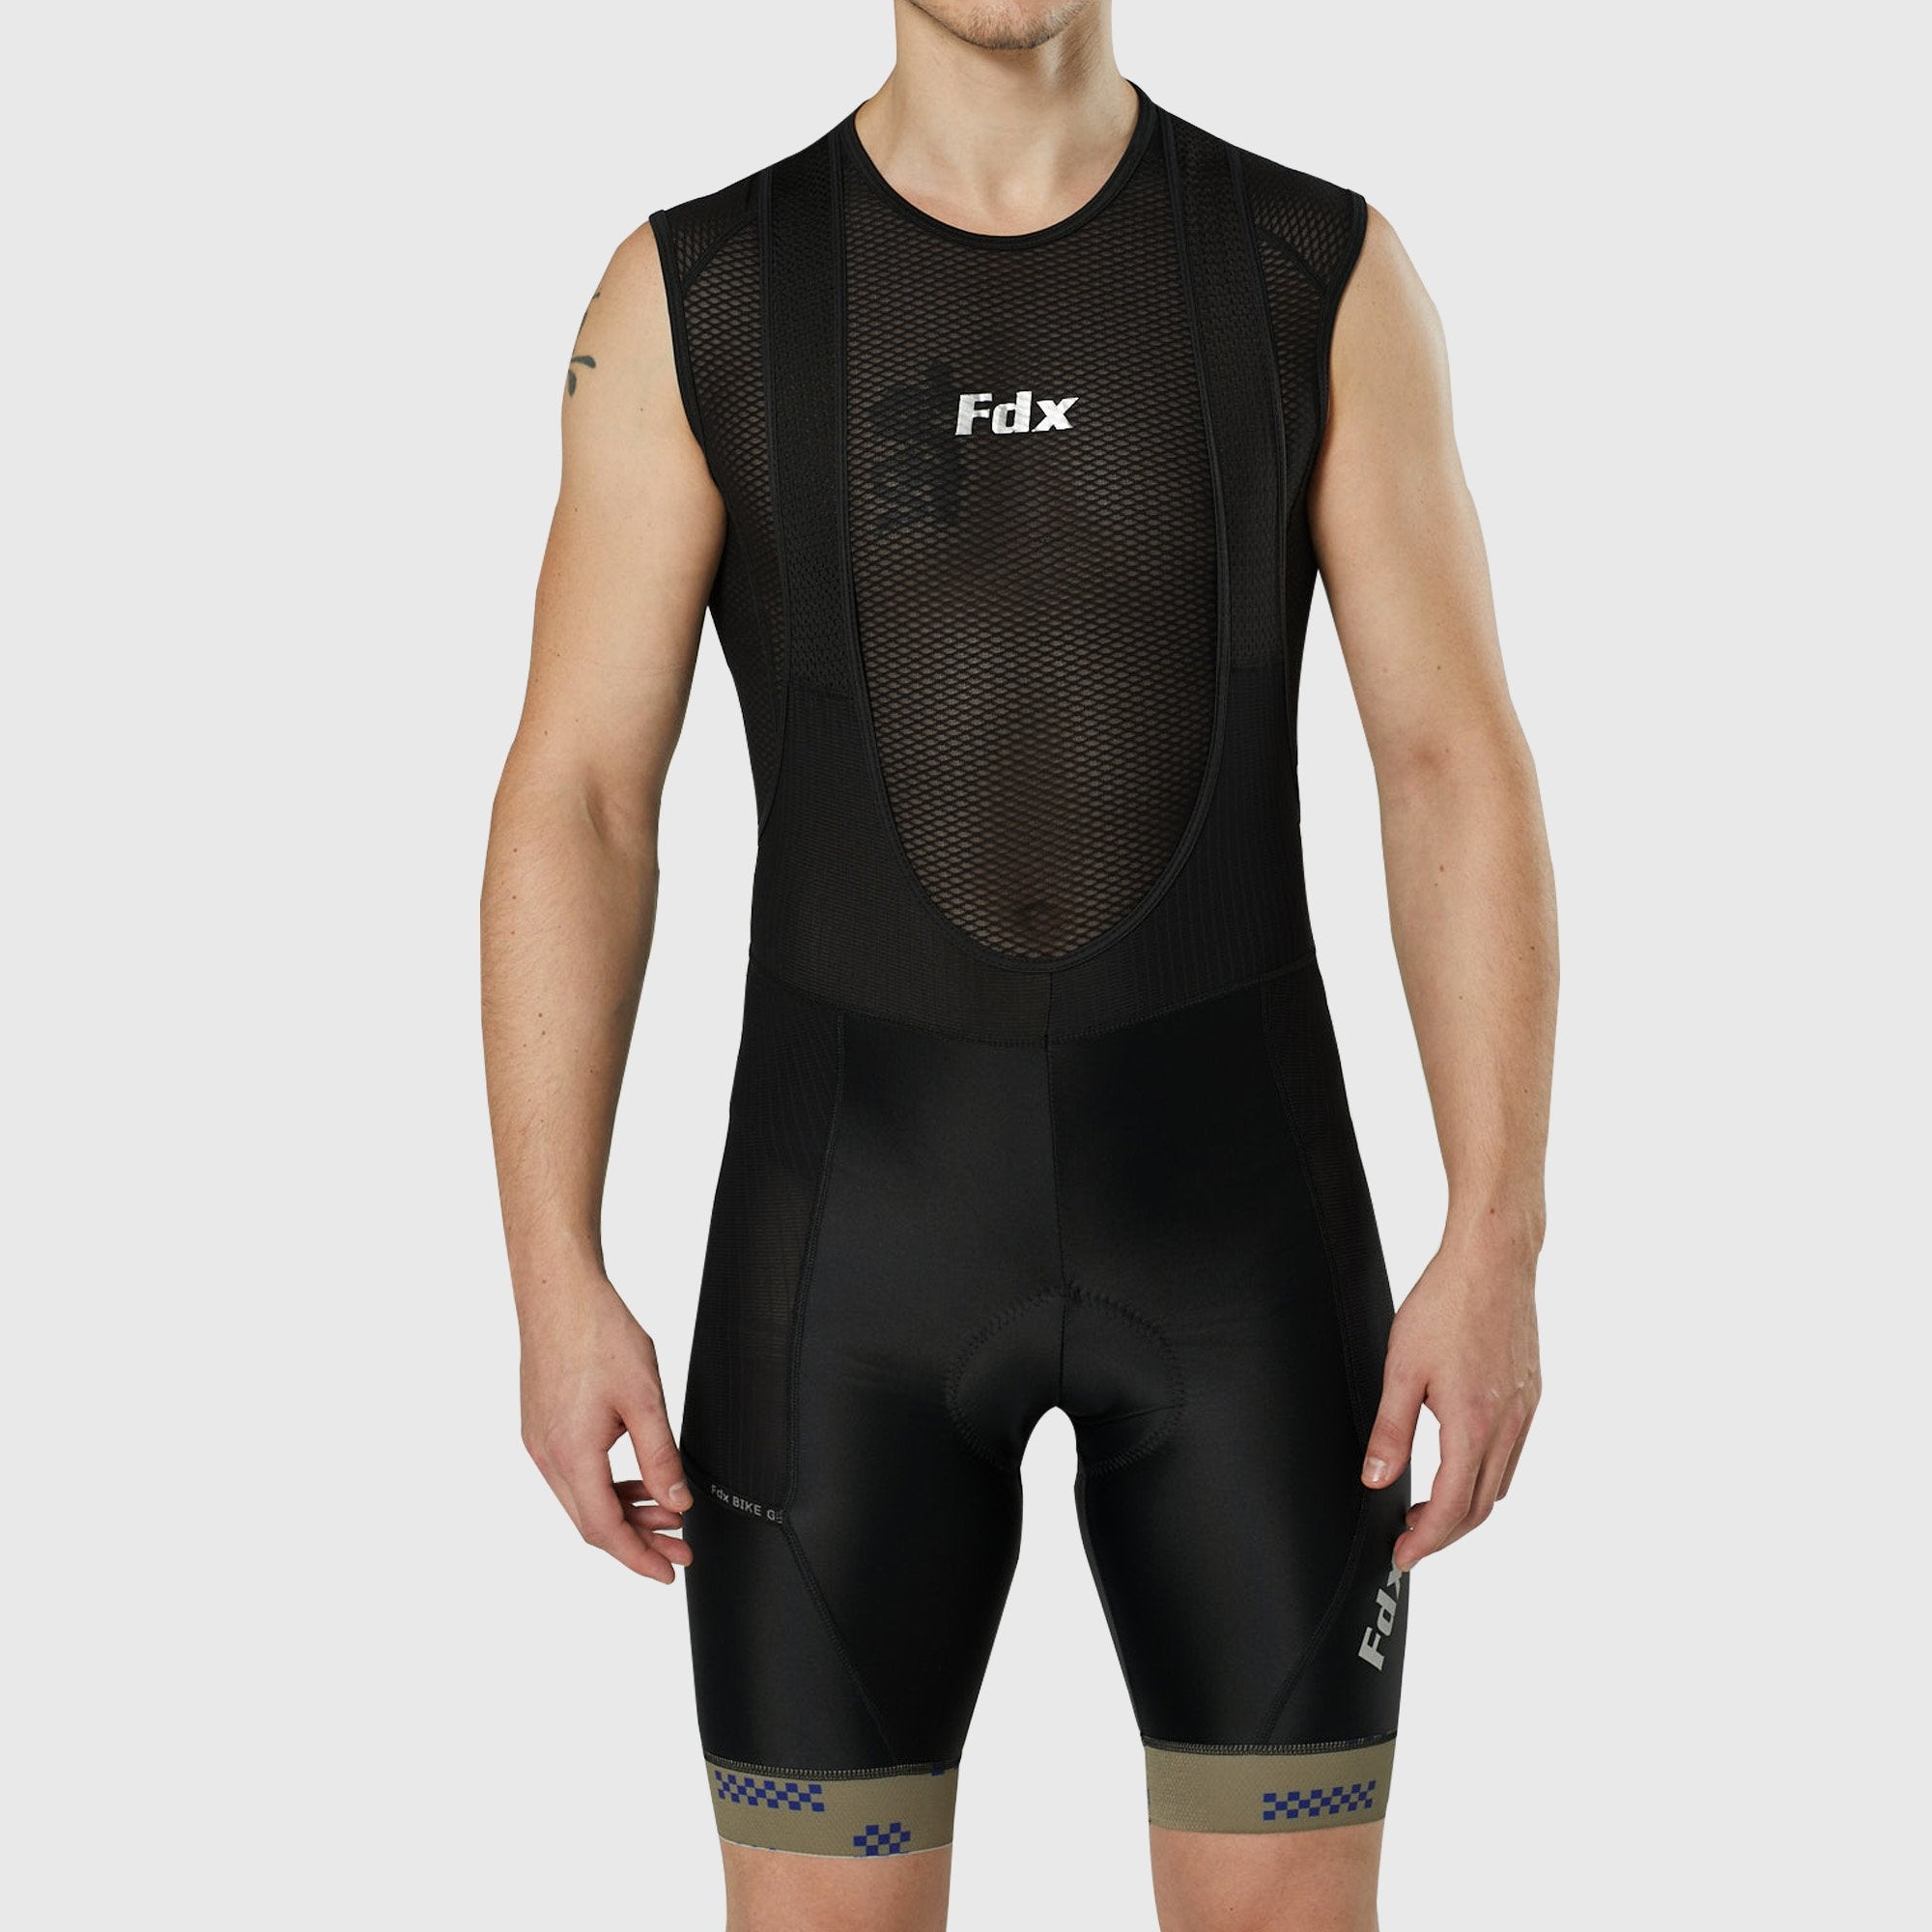 fdx mountain bike shorts